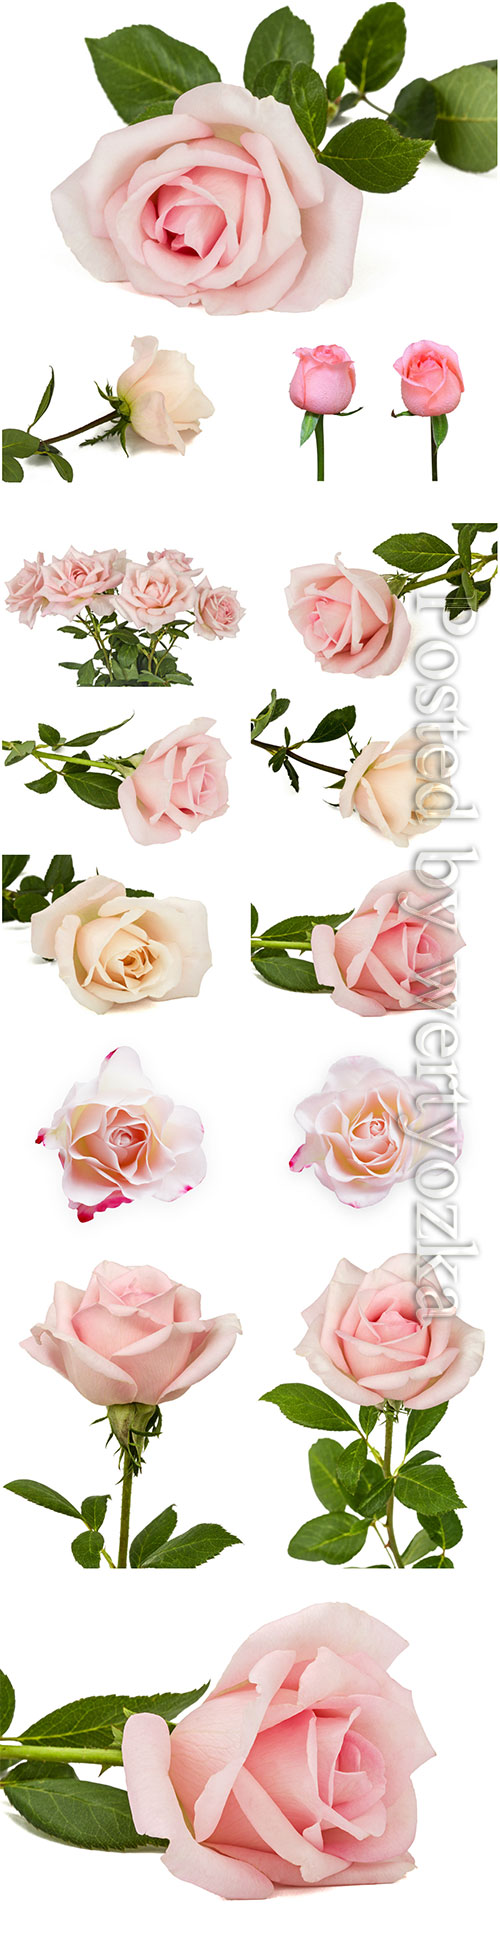 Beautiful pink roses stock photo